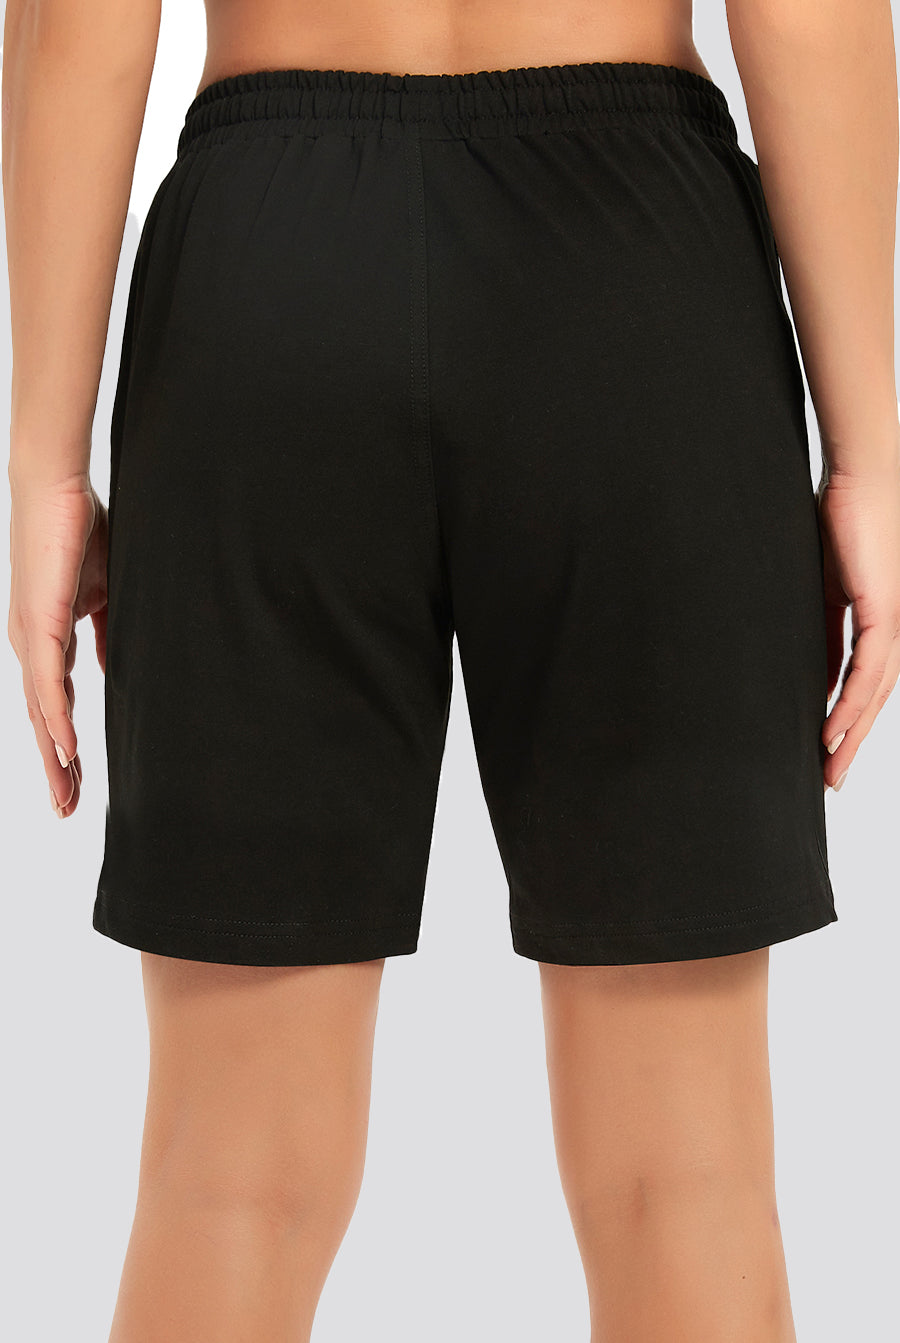 cotton sweat shorts black back view